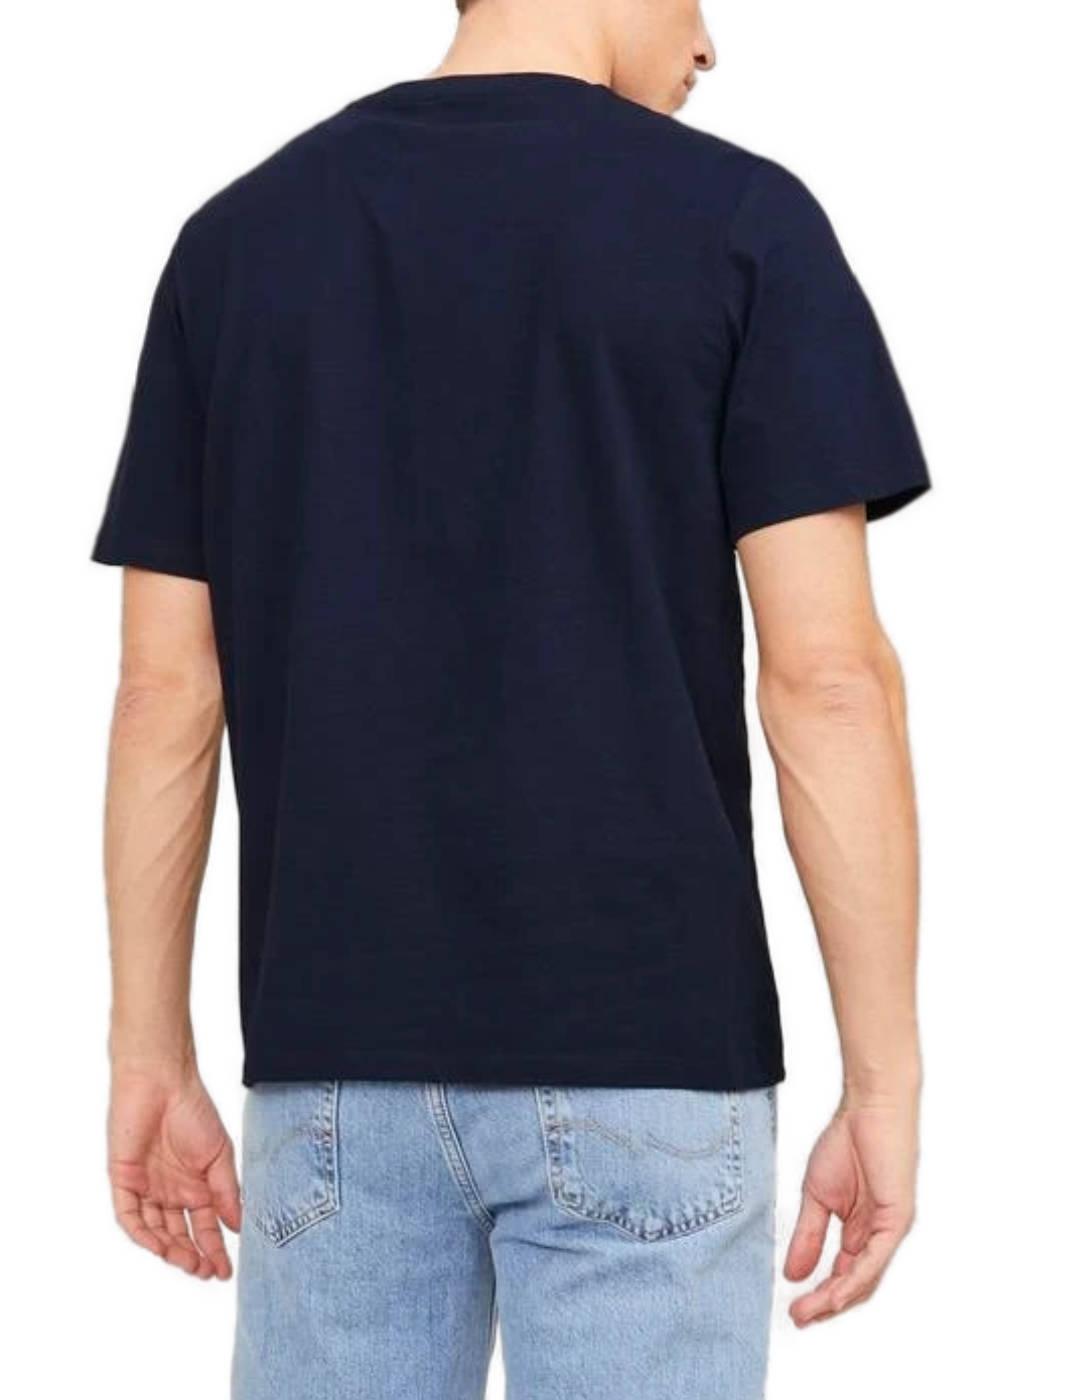 Camiseta básica - MARRON - Kiabi - 4.00€